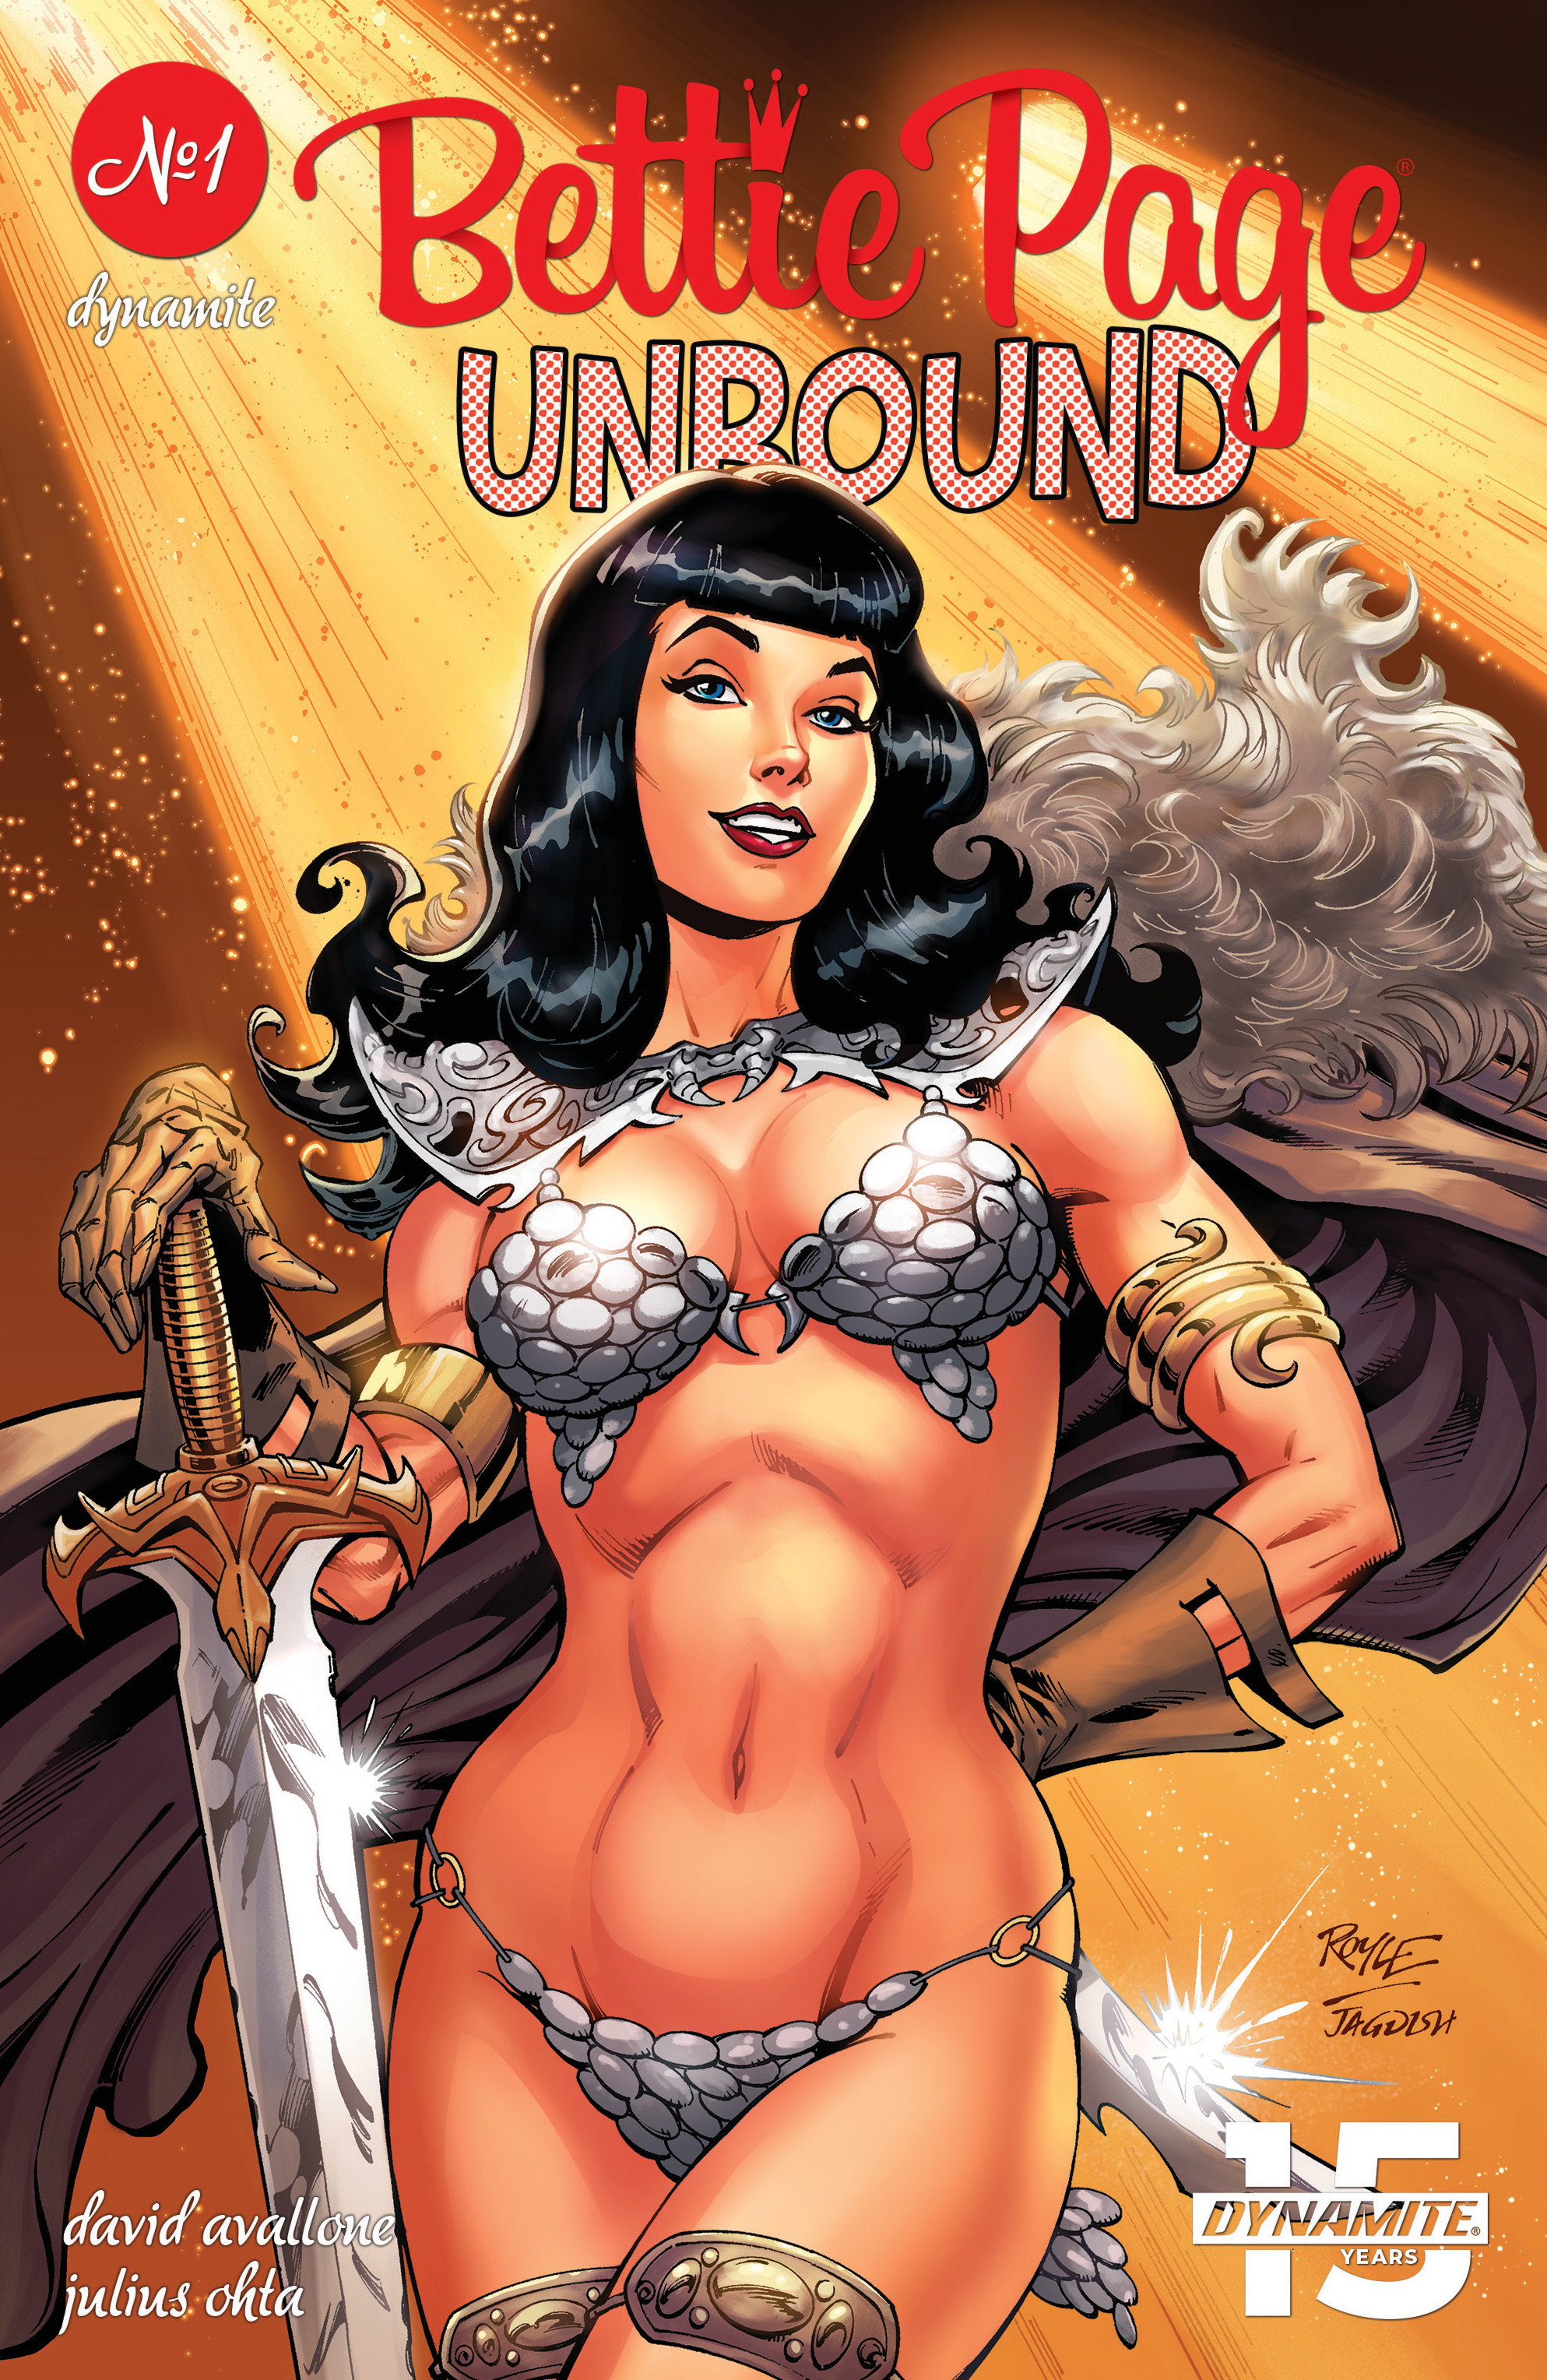 Read online Bettie Page: Unbound comic -  Issue #1 - 1